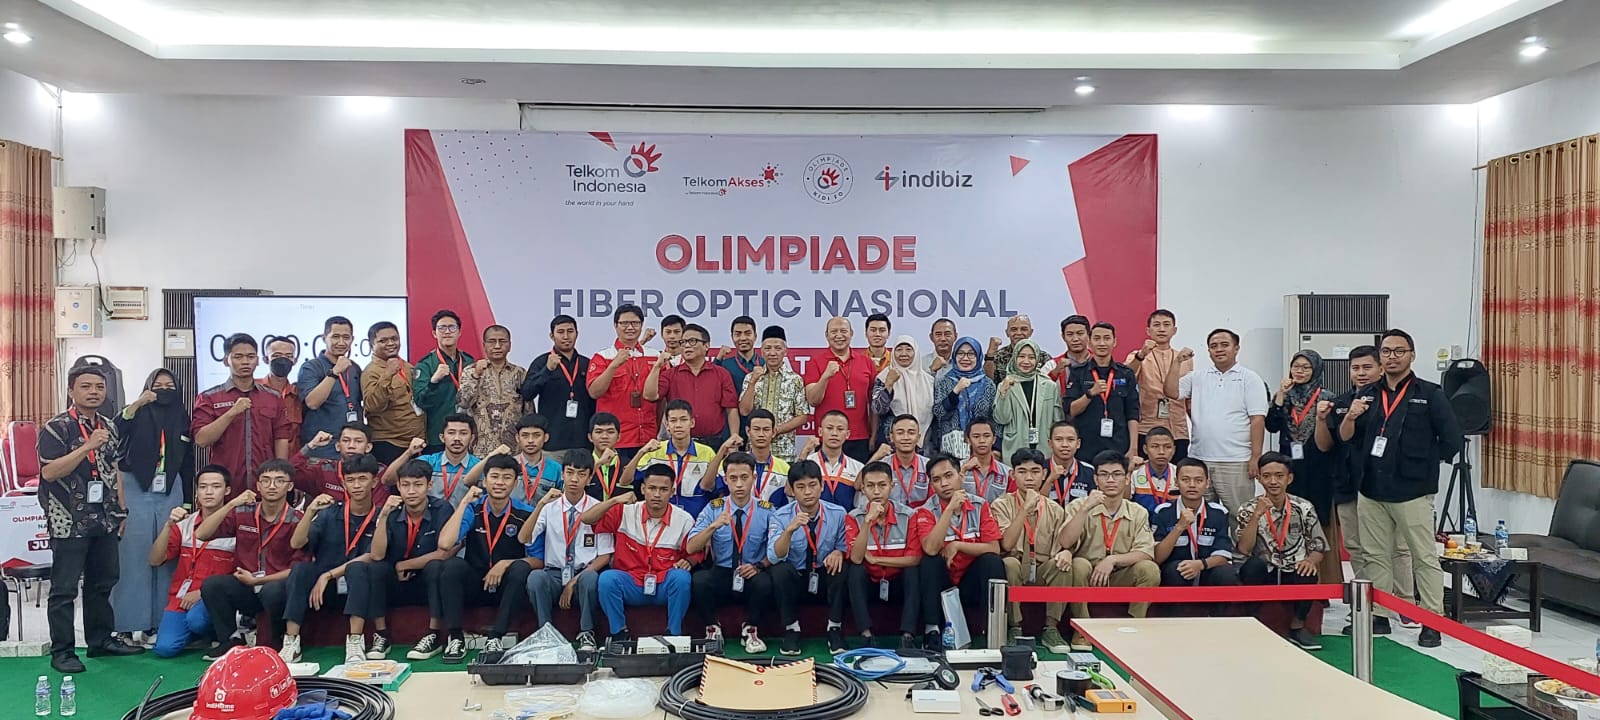 Tingkatkan Kualitas Sekolah dan Lulusan melalui Olimpiade Fiber Optic Nasional Witel Cirebon